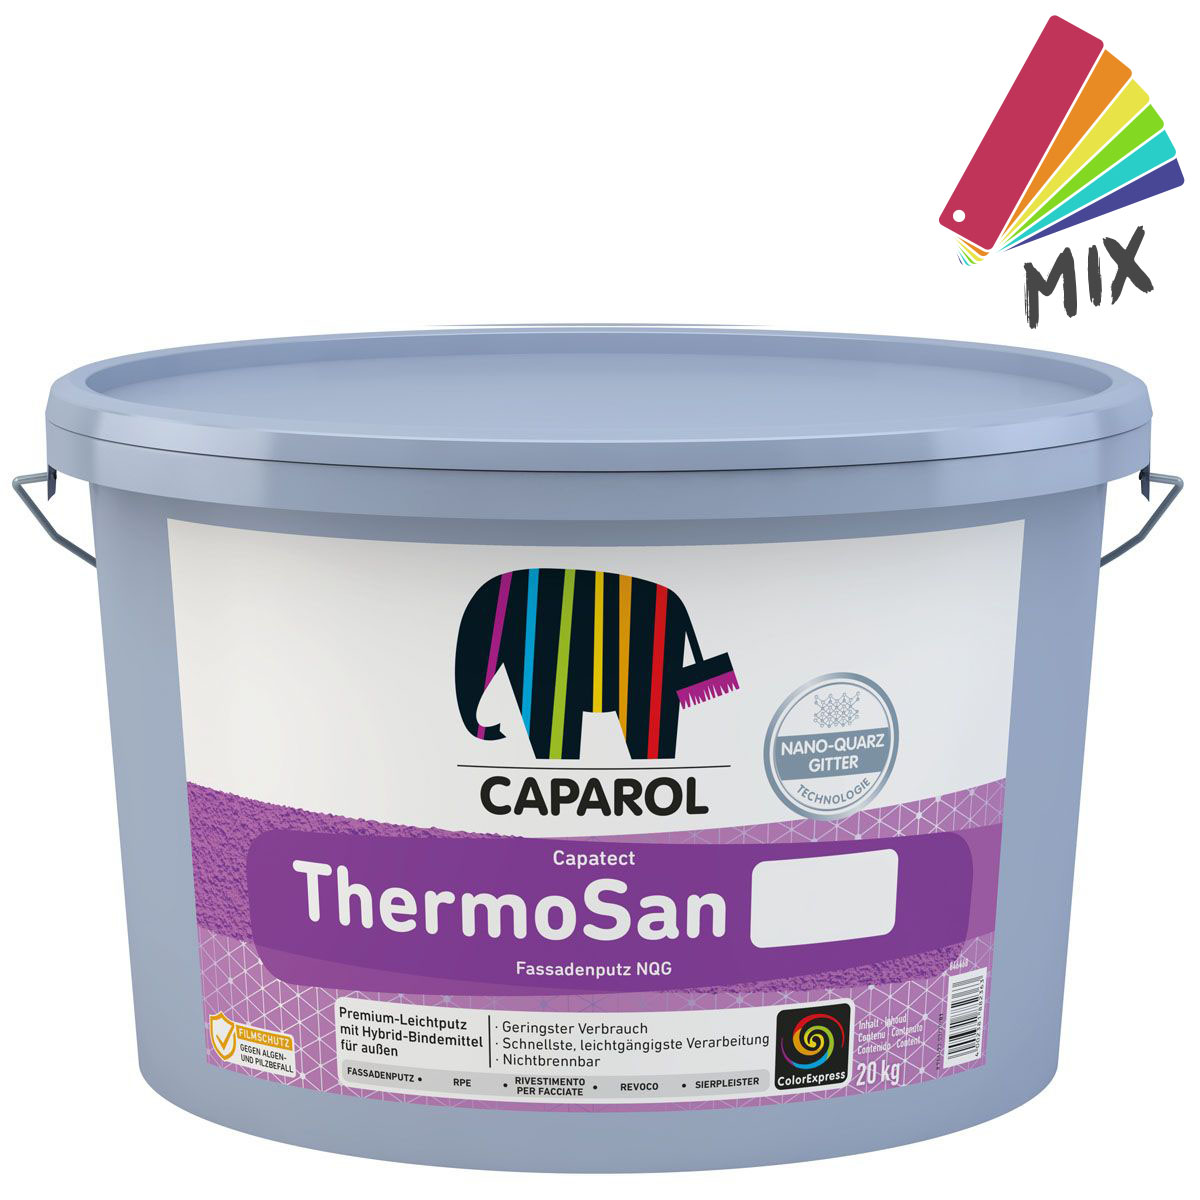 Caparol Capatect Thermosan Fassadenputz NQG K30 (3mm) 20kg, MIX PG S